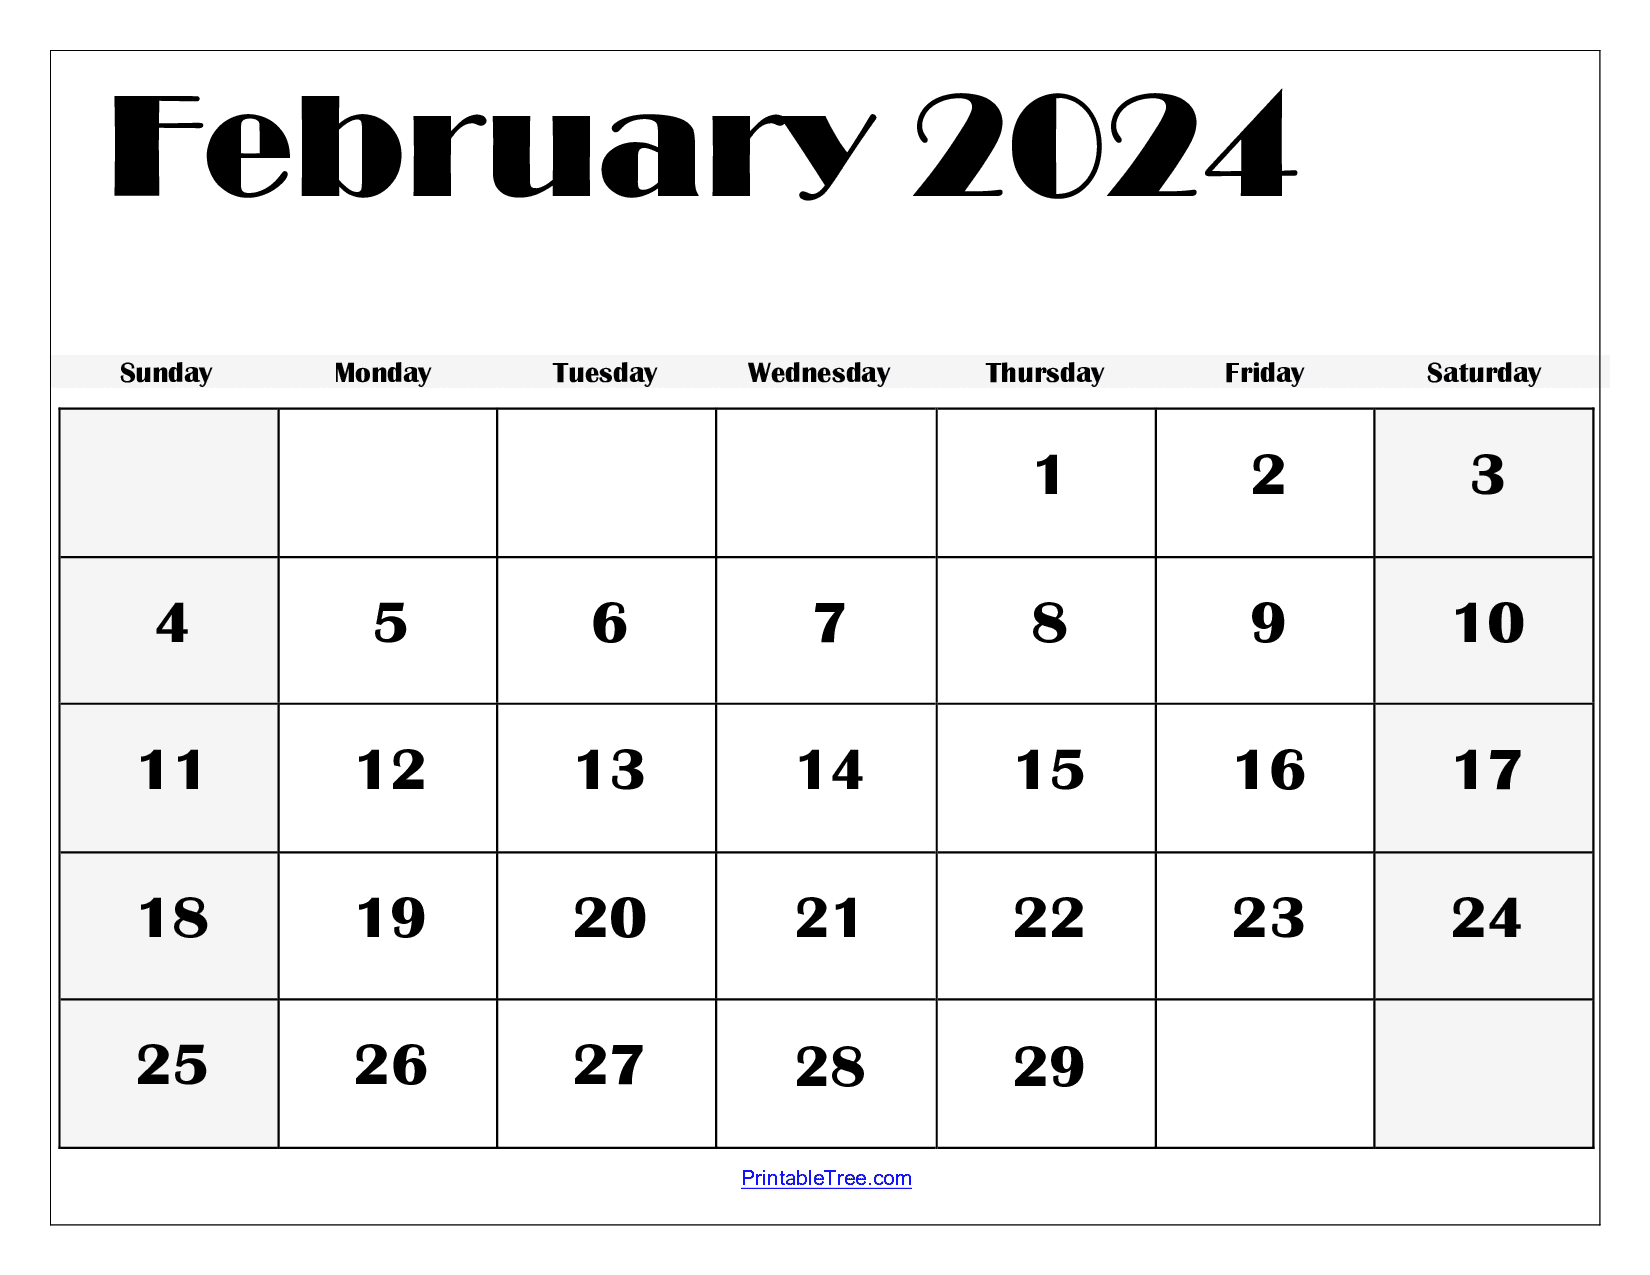 February 2024 Calendar Printable Pdf Template With Holidays for Feb Calendar 2024 Printable